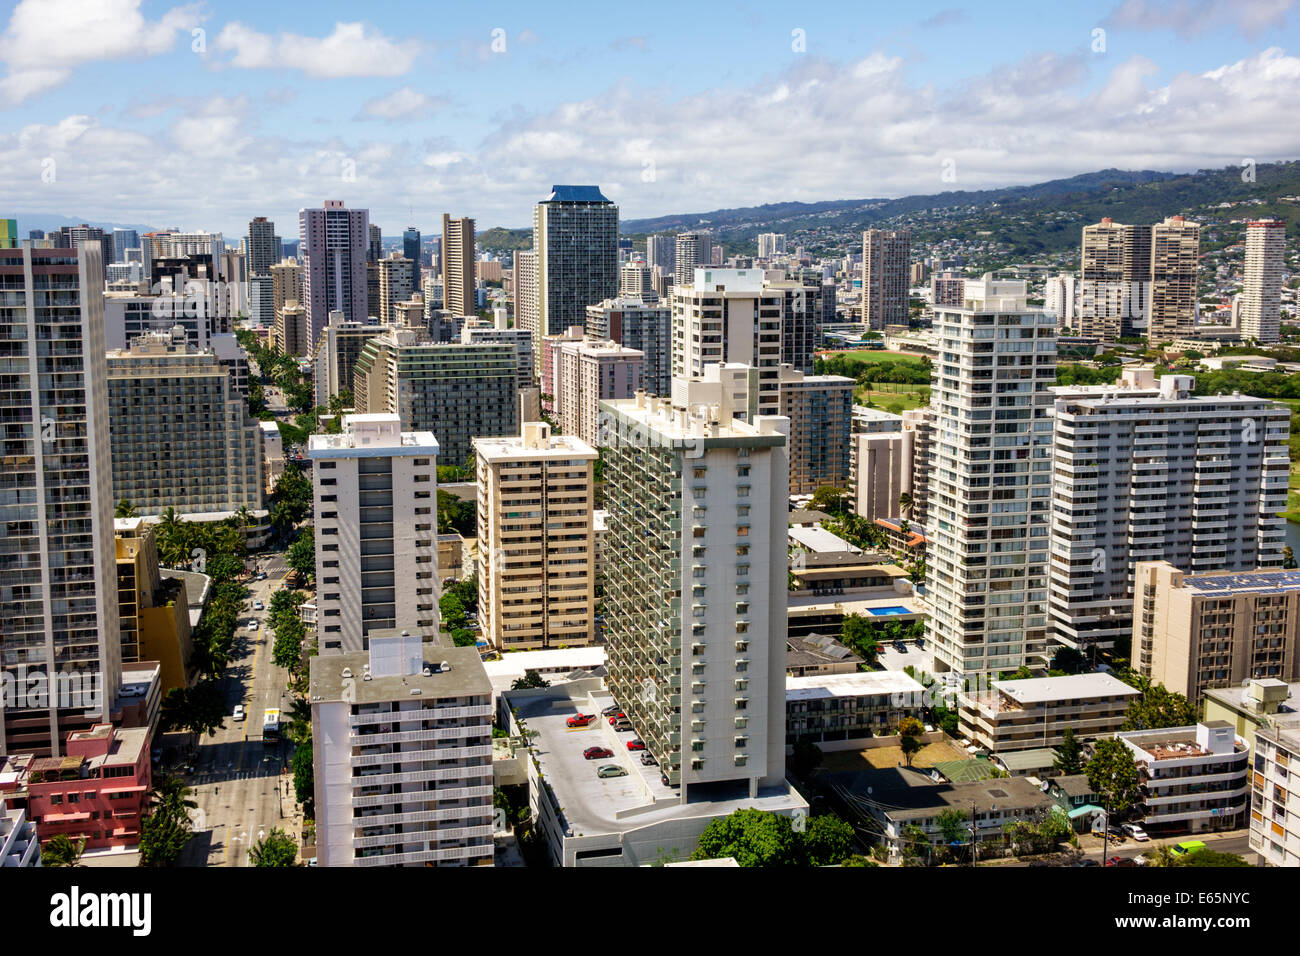 Honolulu Hawaii,Oahu,Hawaiian,Waikiki Beach,resort,high rise,building,hotels,condominium buildings,USA,US,United,States,America Polynesia,HI140323017 Stock Photo